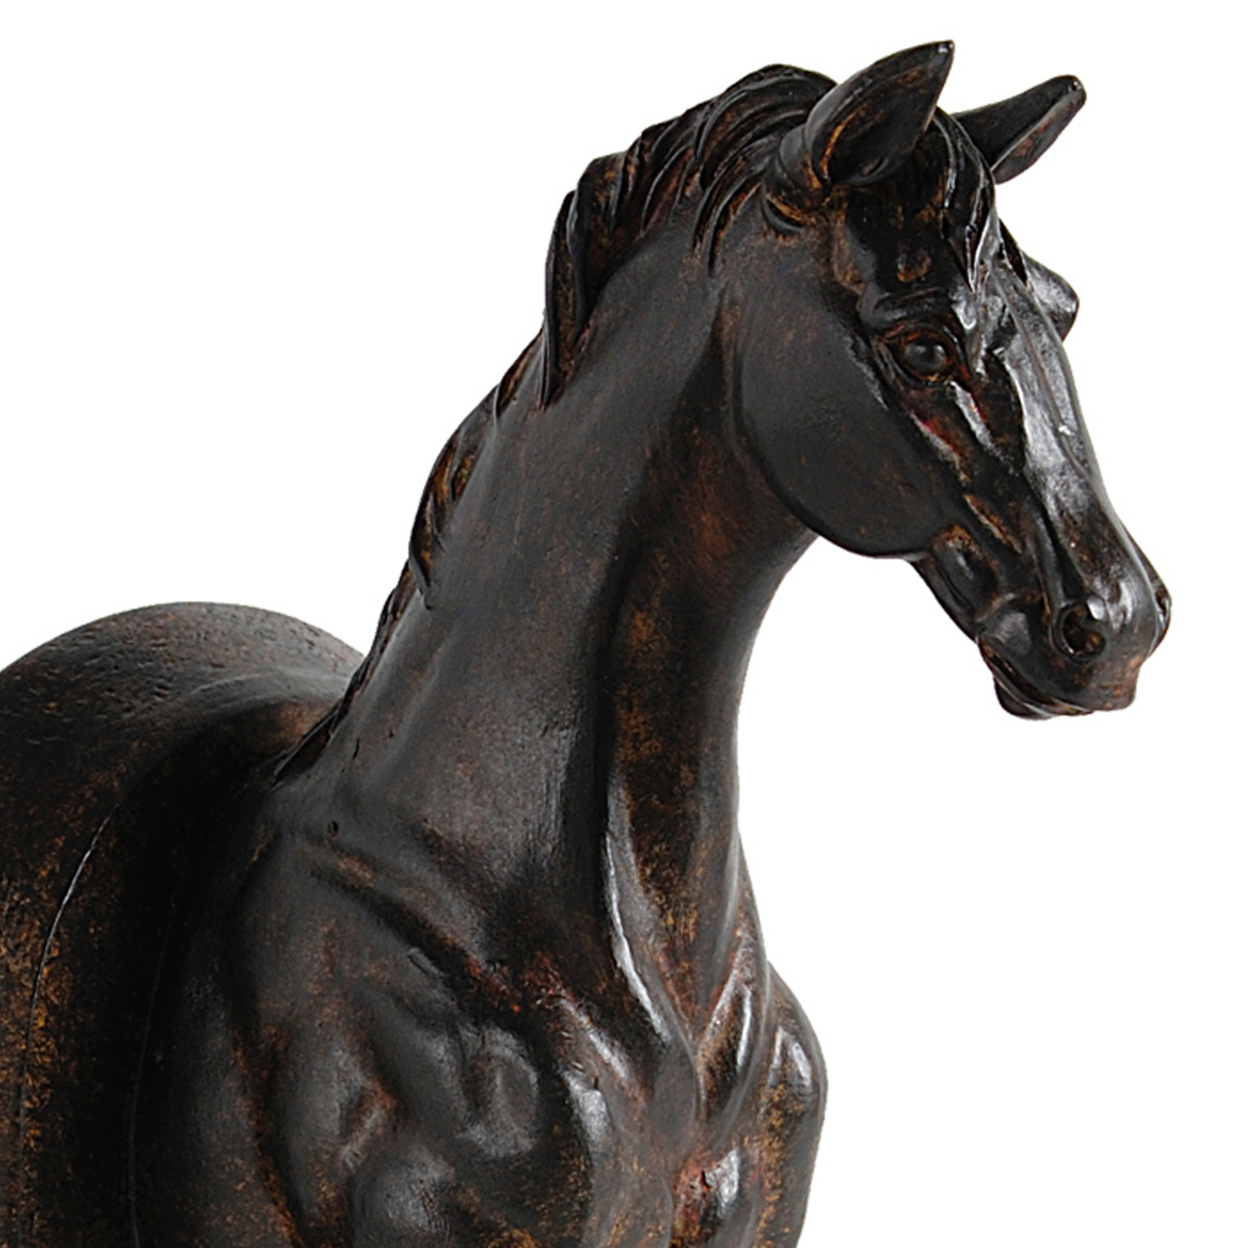 11 Inch Modern Bookend, Trotting Horse FIgurines, Artisanal Black Finish- Saltoro Sherpi